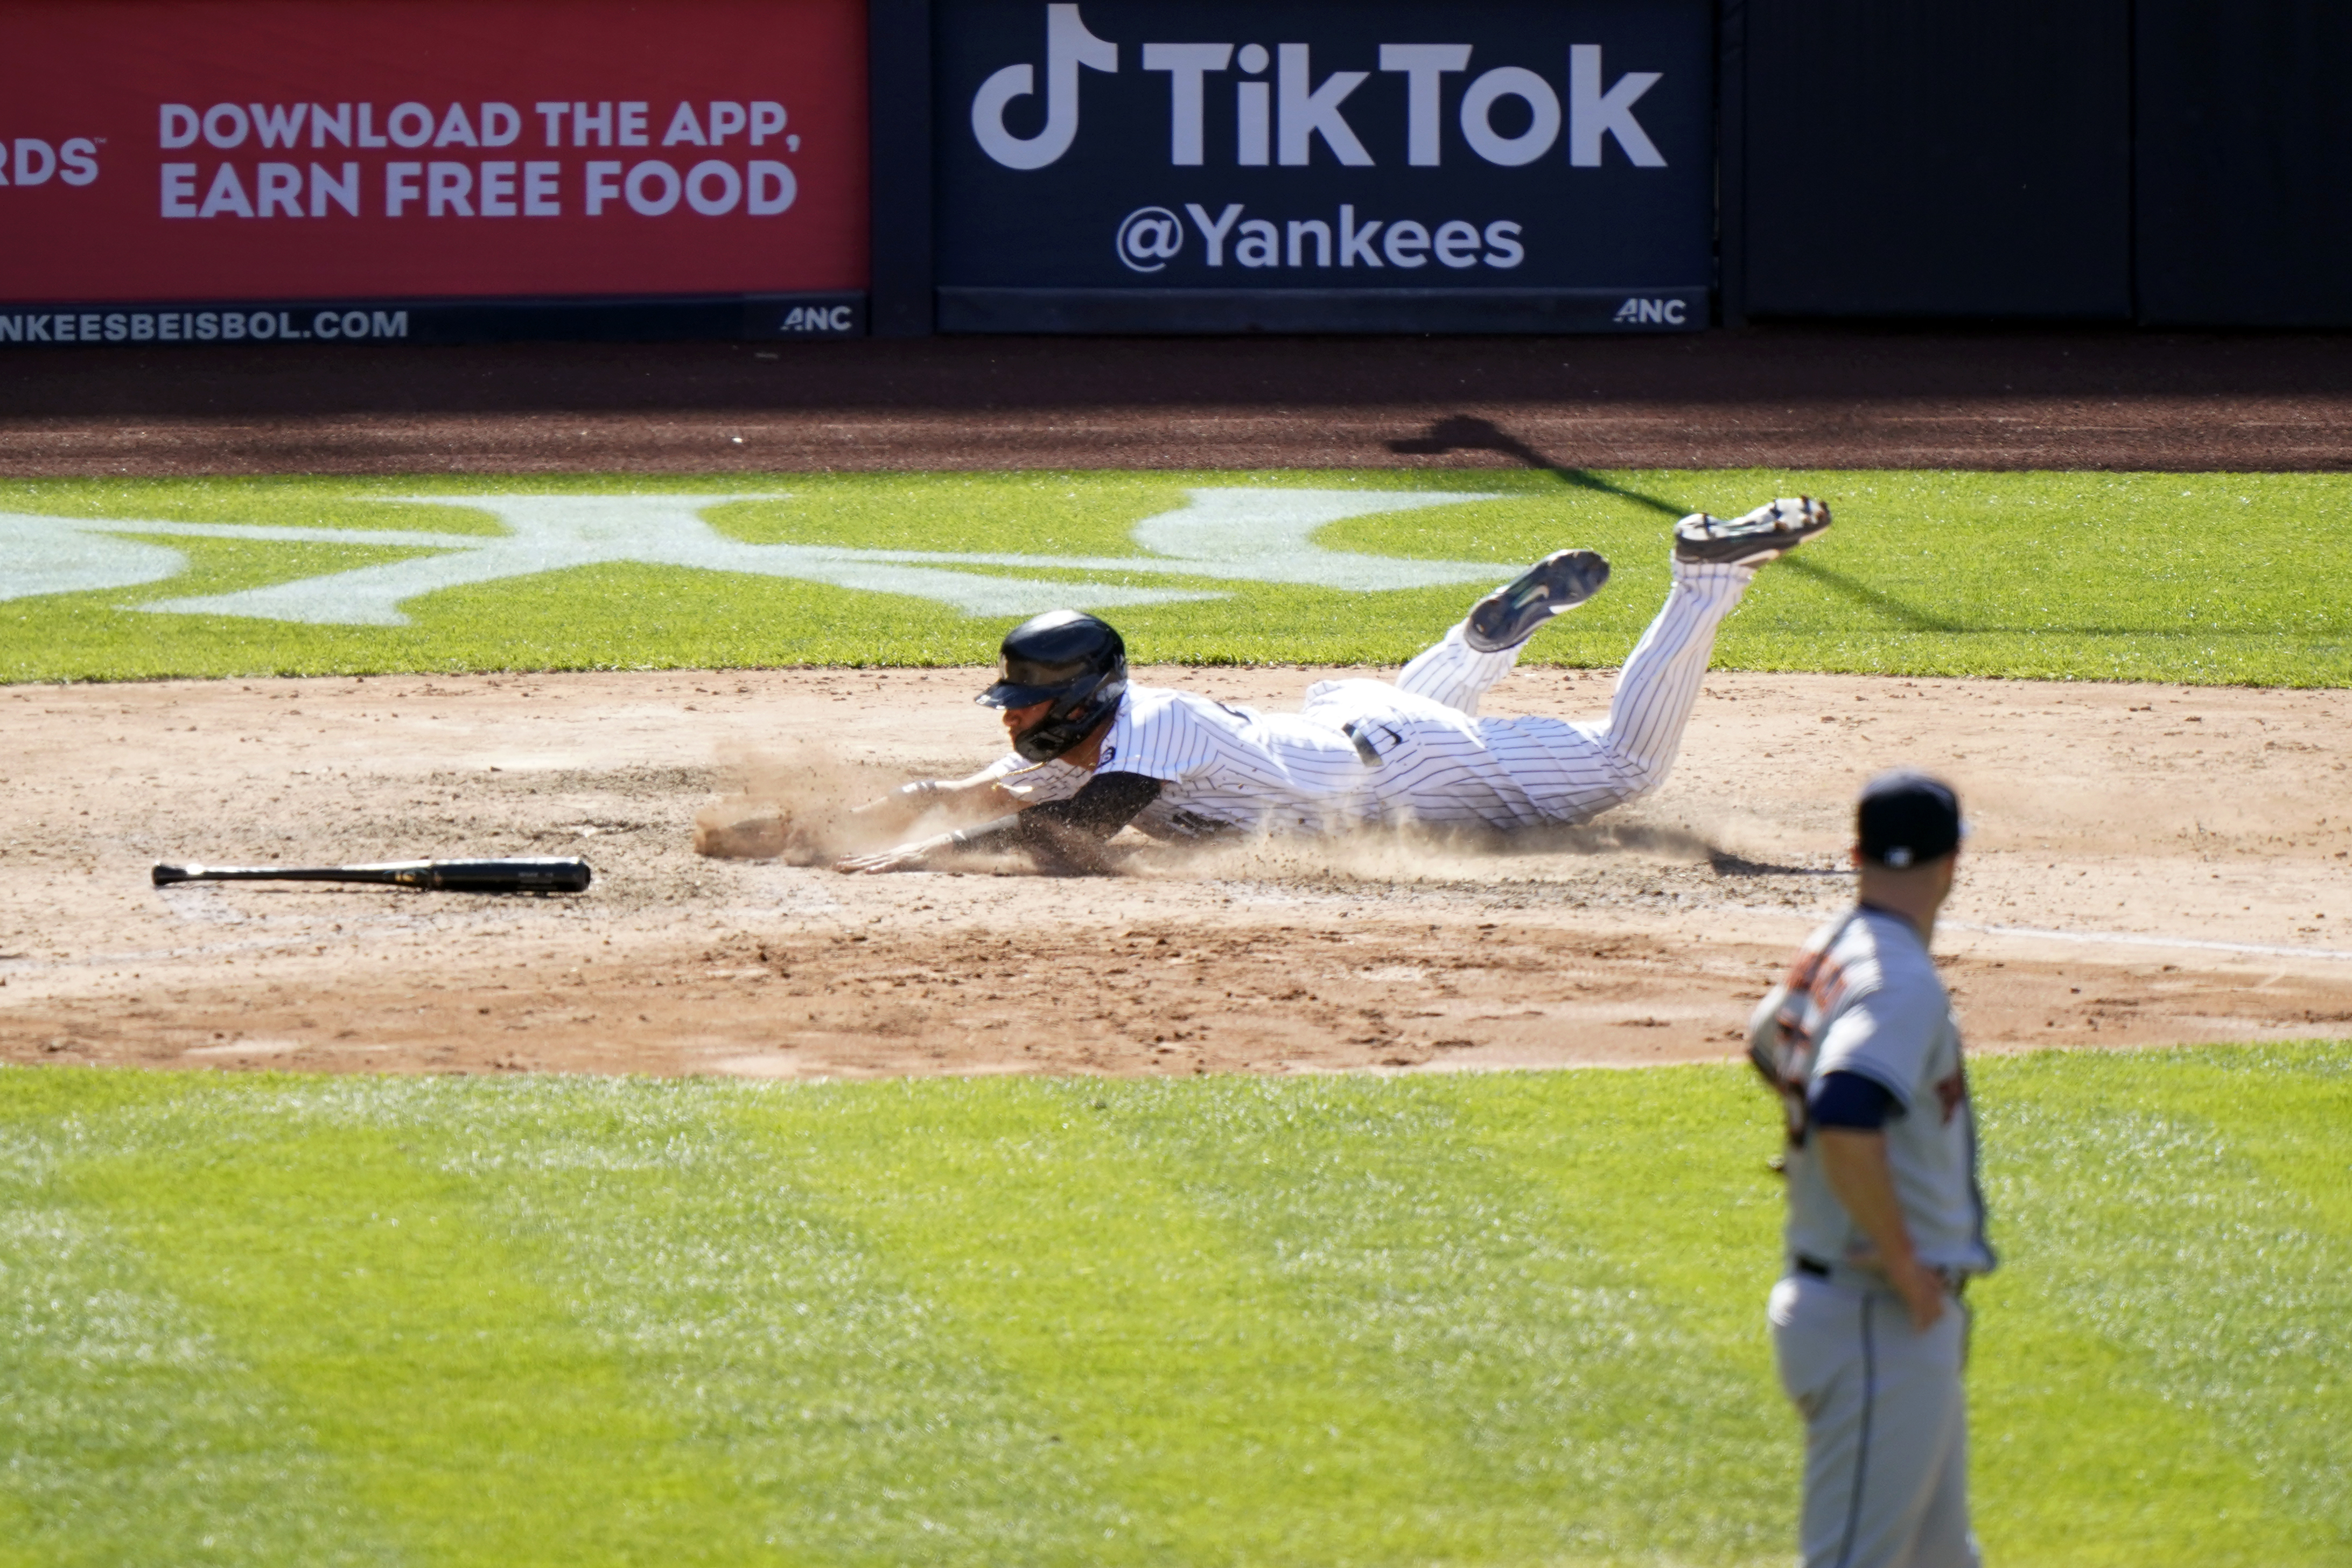 New York Yankees' Gleyber Torres on Houston Astros cheating scandal